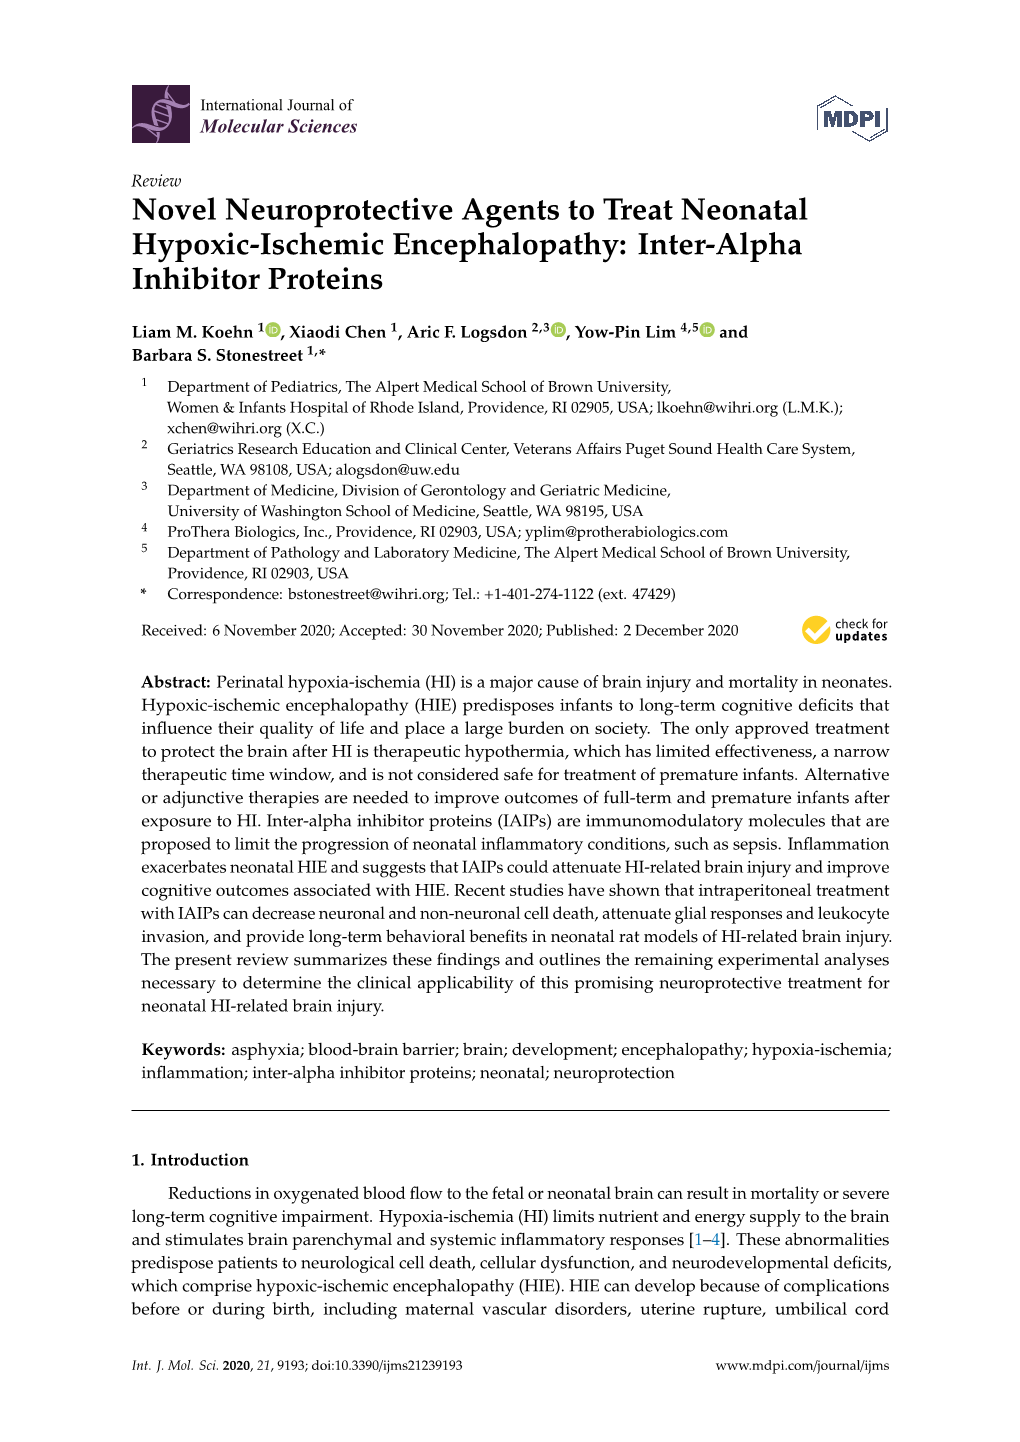 Novel Neuroprotective Agents to Treat Neonatal Hypoxic-Ischemic Encephalopathy: Inter-Alpha Inhibitor Proteins